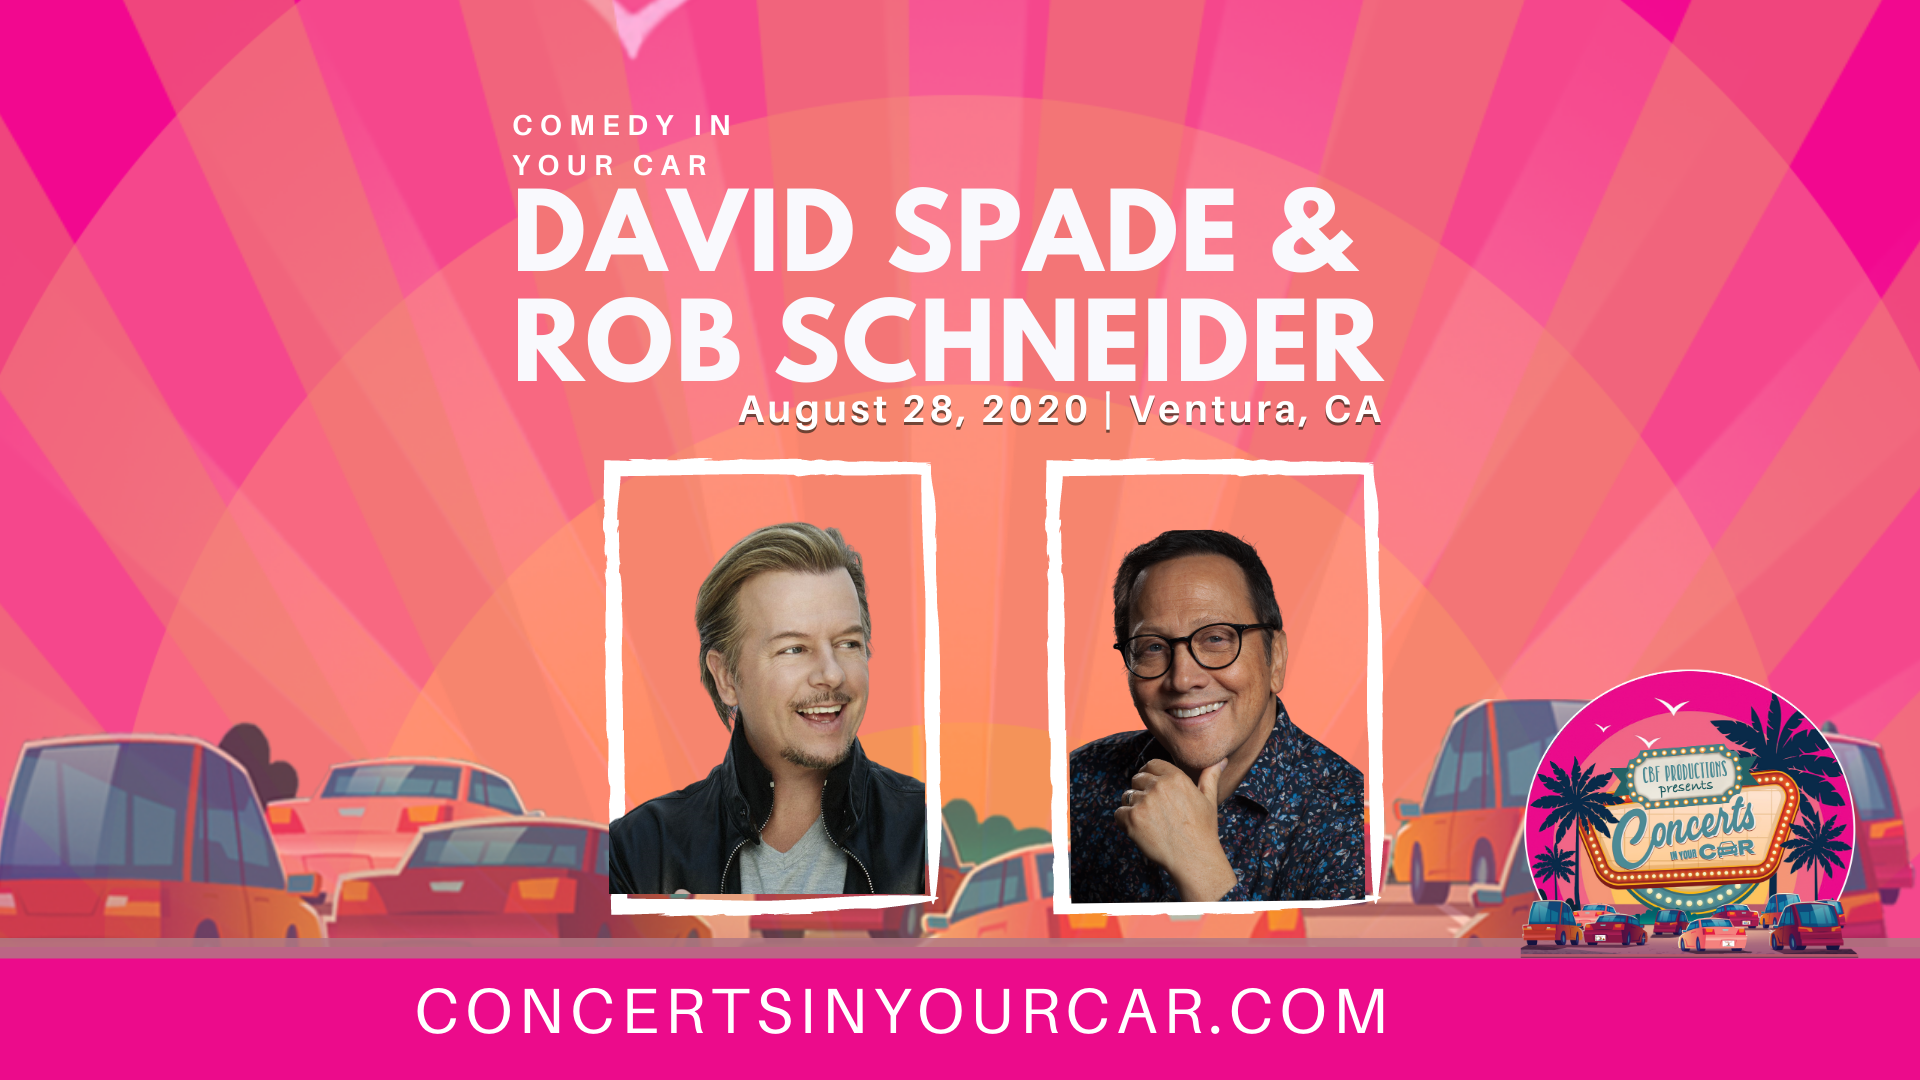 9 pm - DAVID SPADE & ROB SCHNEIDER - COMEDY IN YOUR CAR